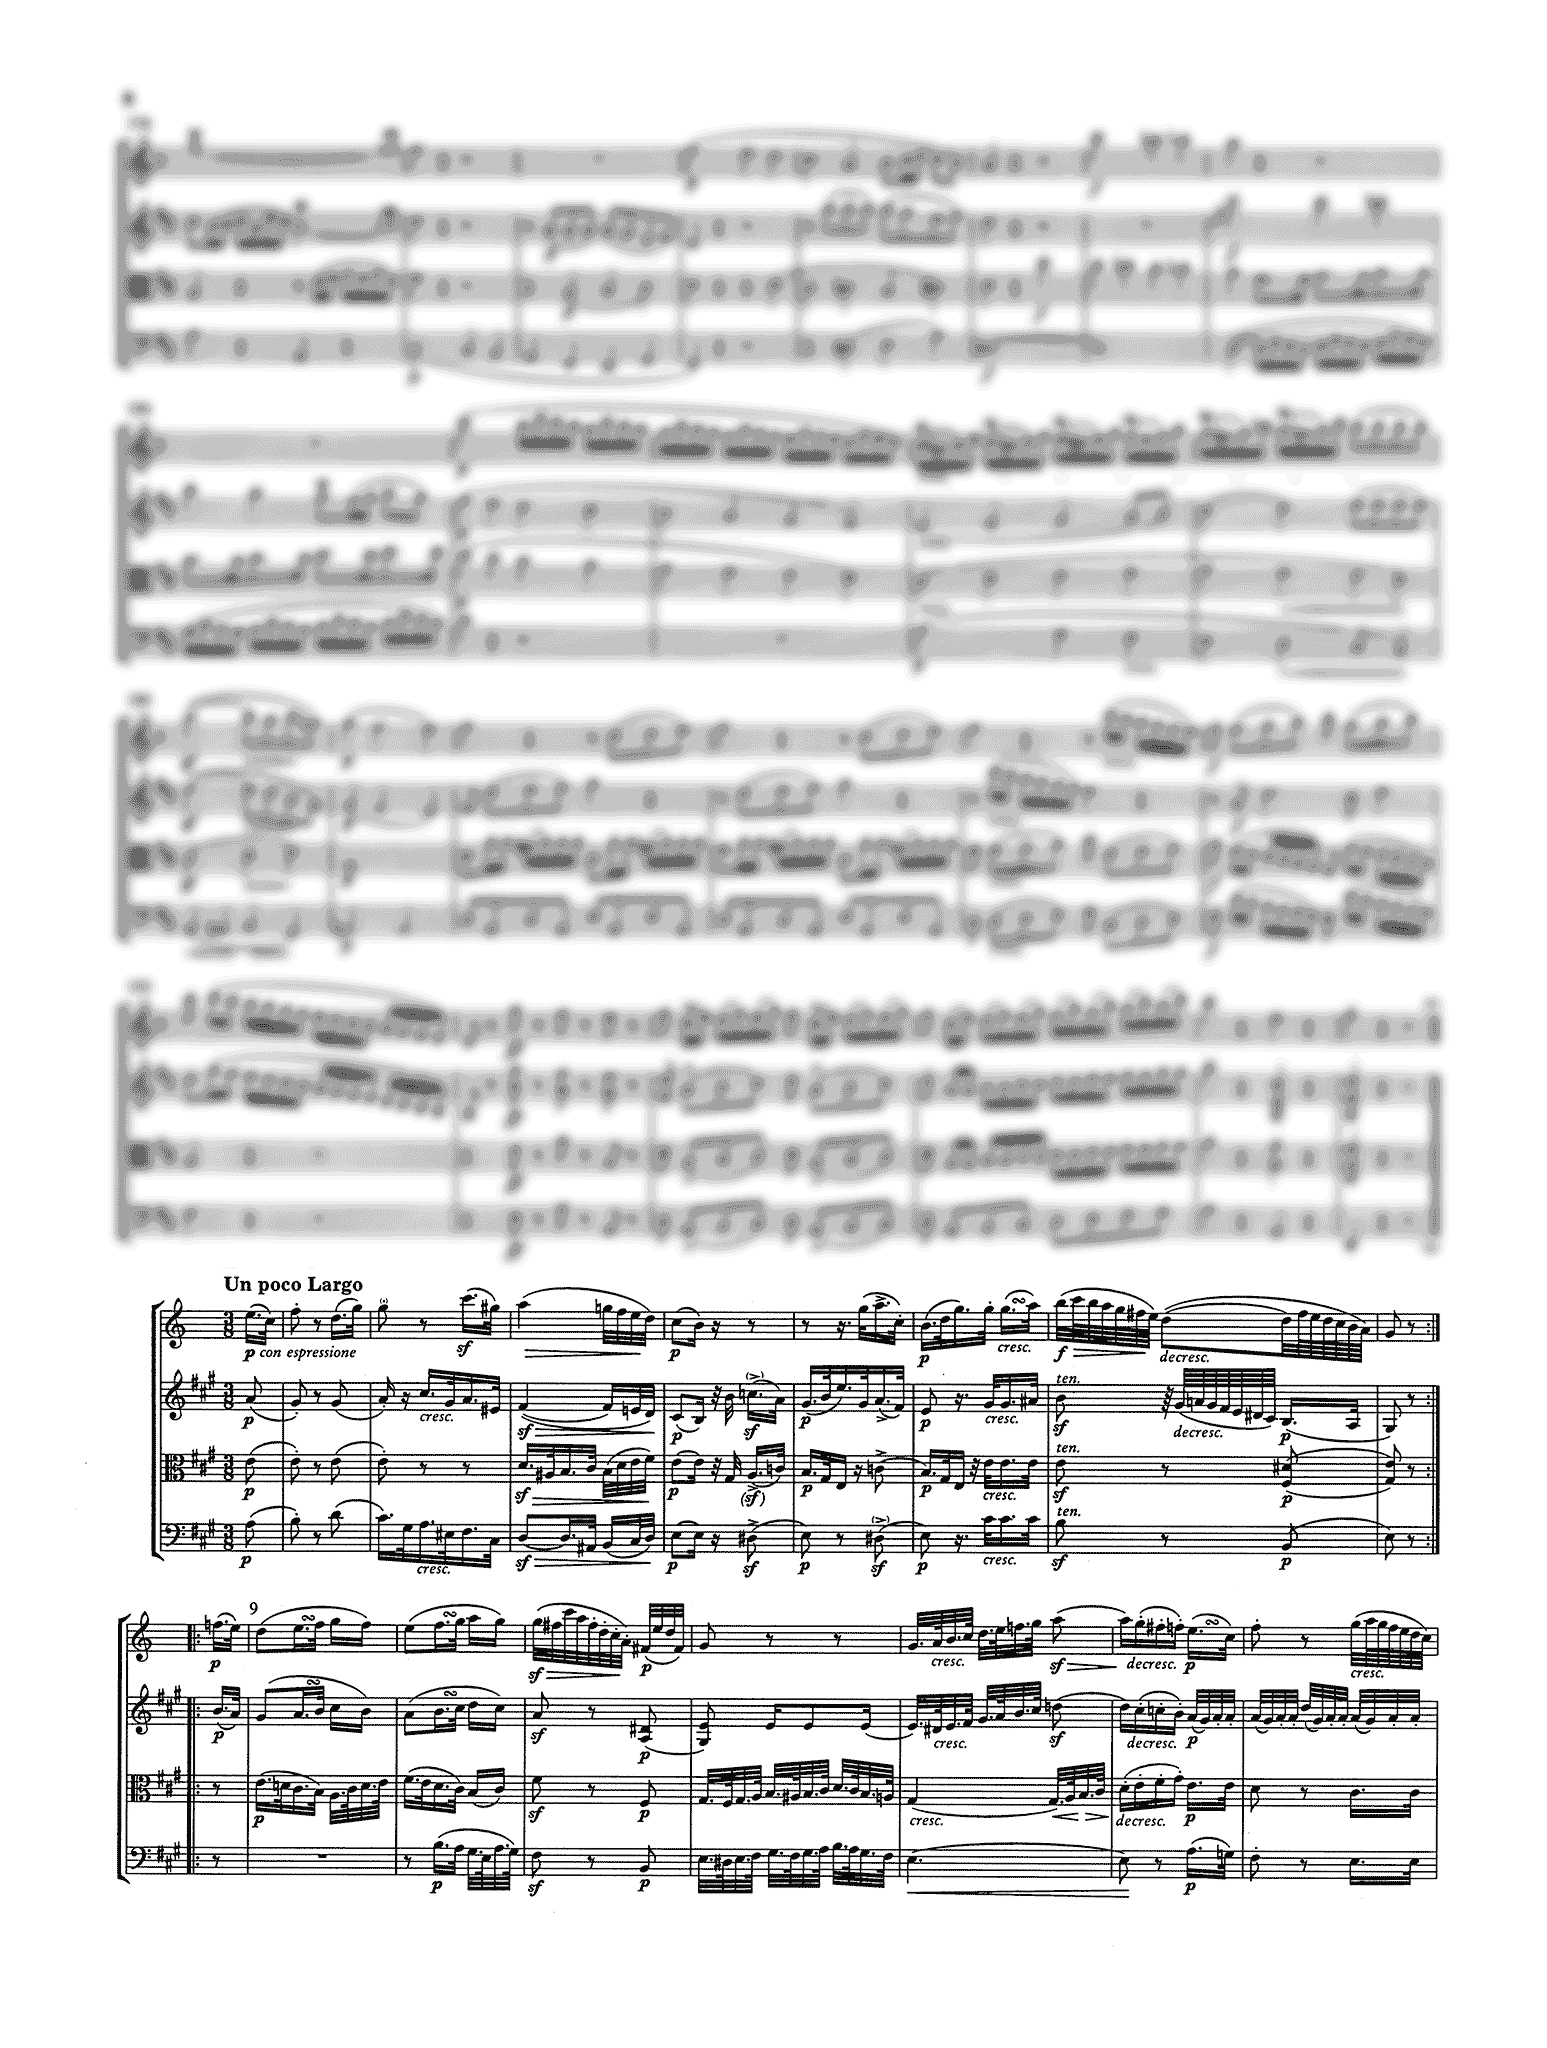 Crusell Clarinet Quartet No. 3 in D Major, Op. 7 - Movement 2